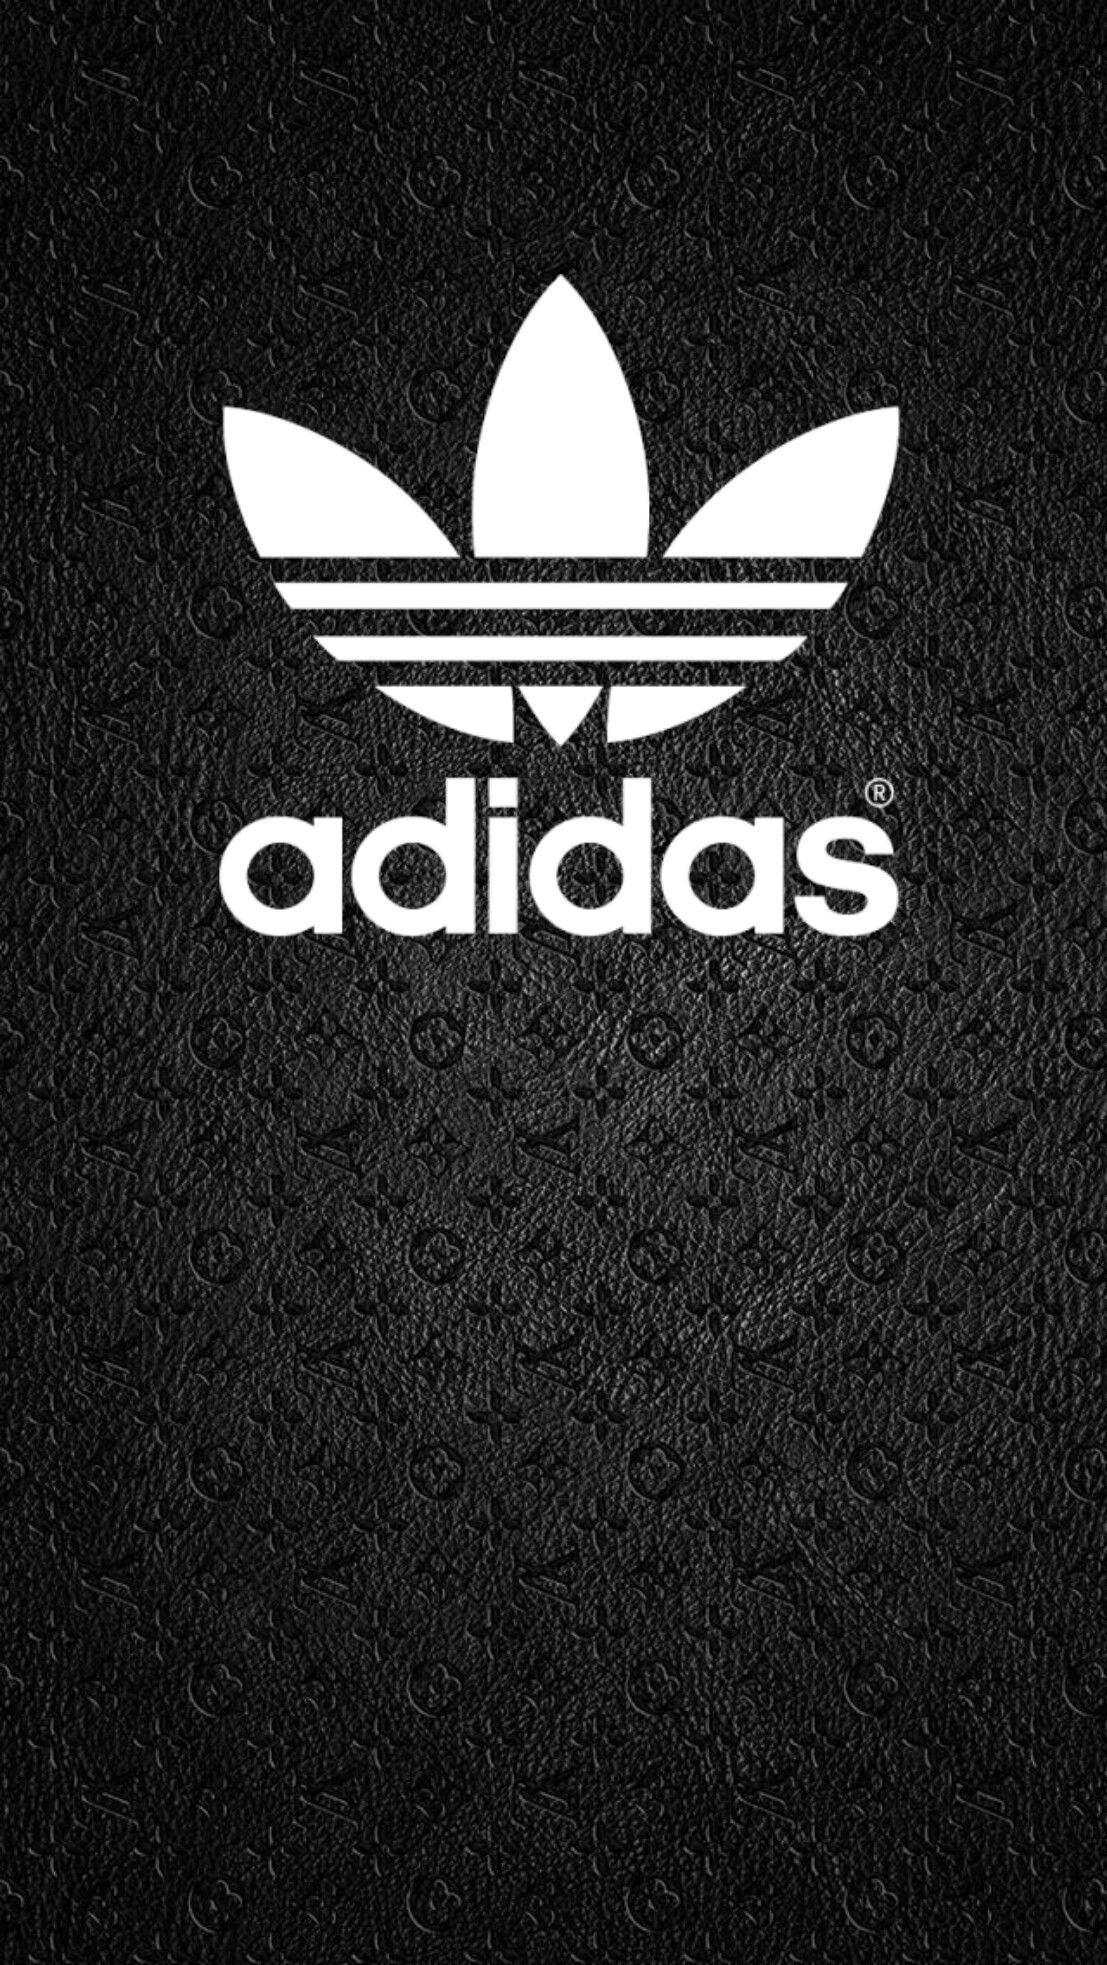 Whiteadidas Logo - Adidas Logo White On Black BG - Wallpaper/Background/Screensaver ...